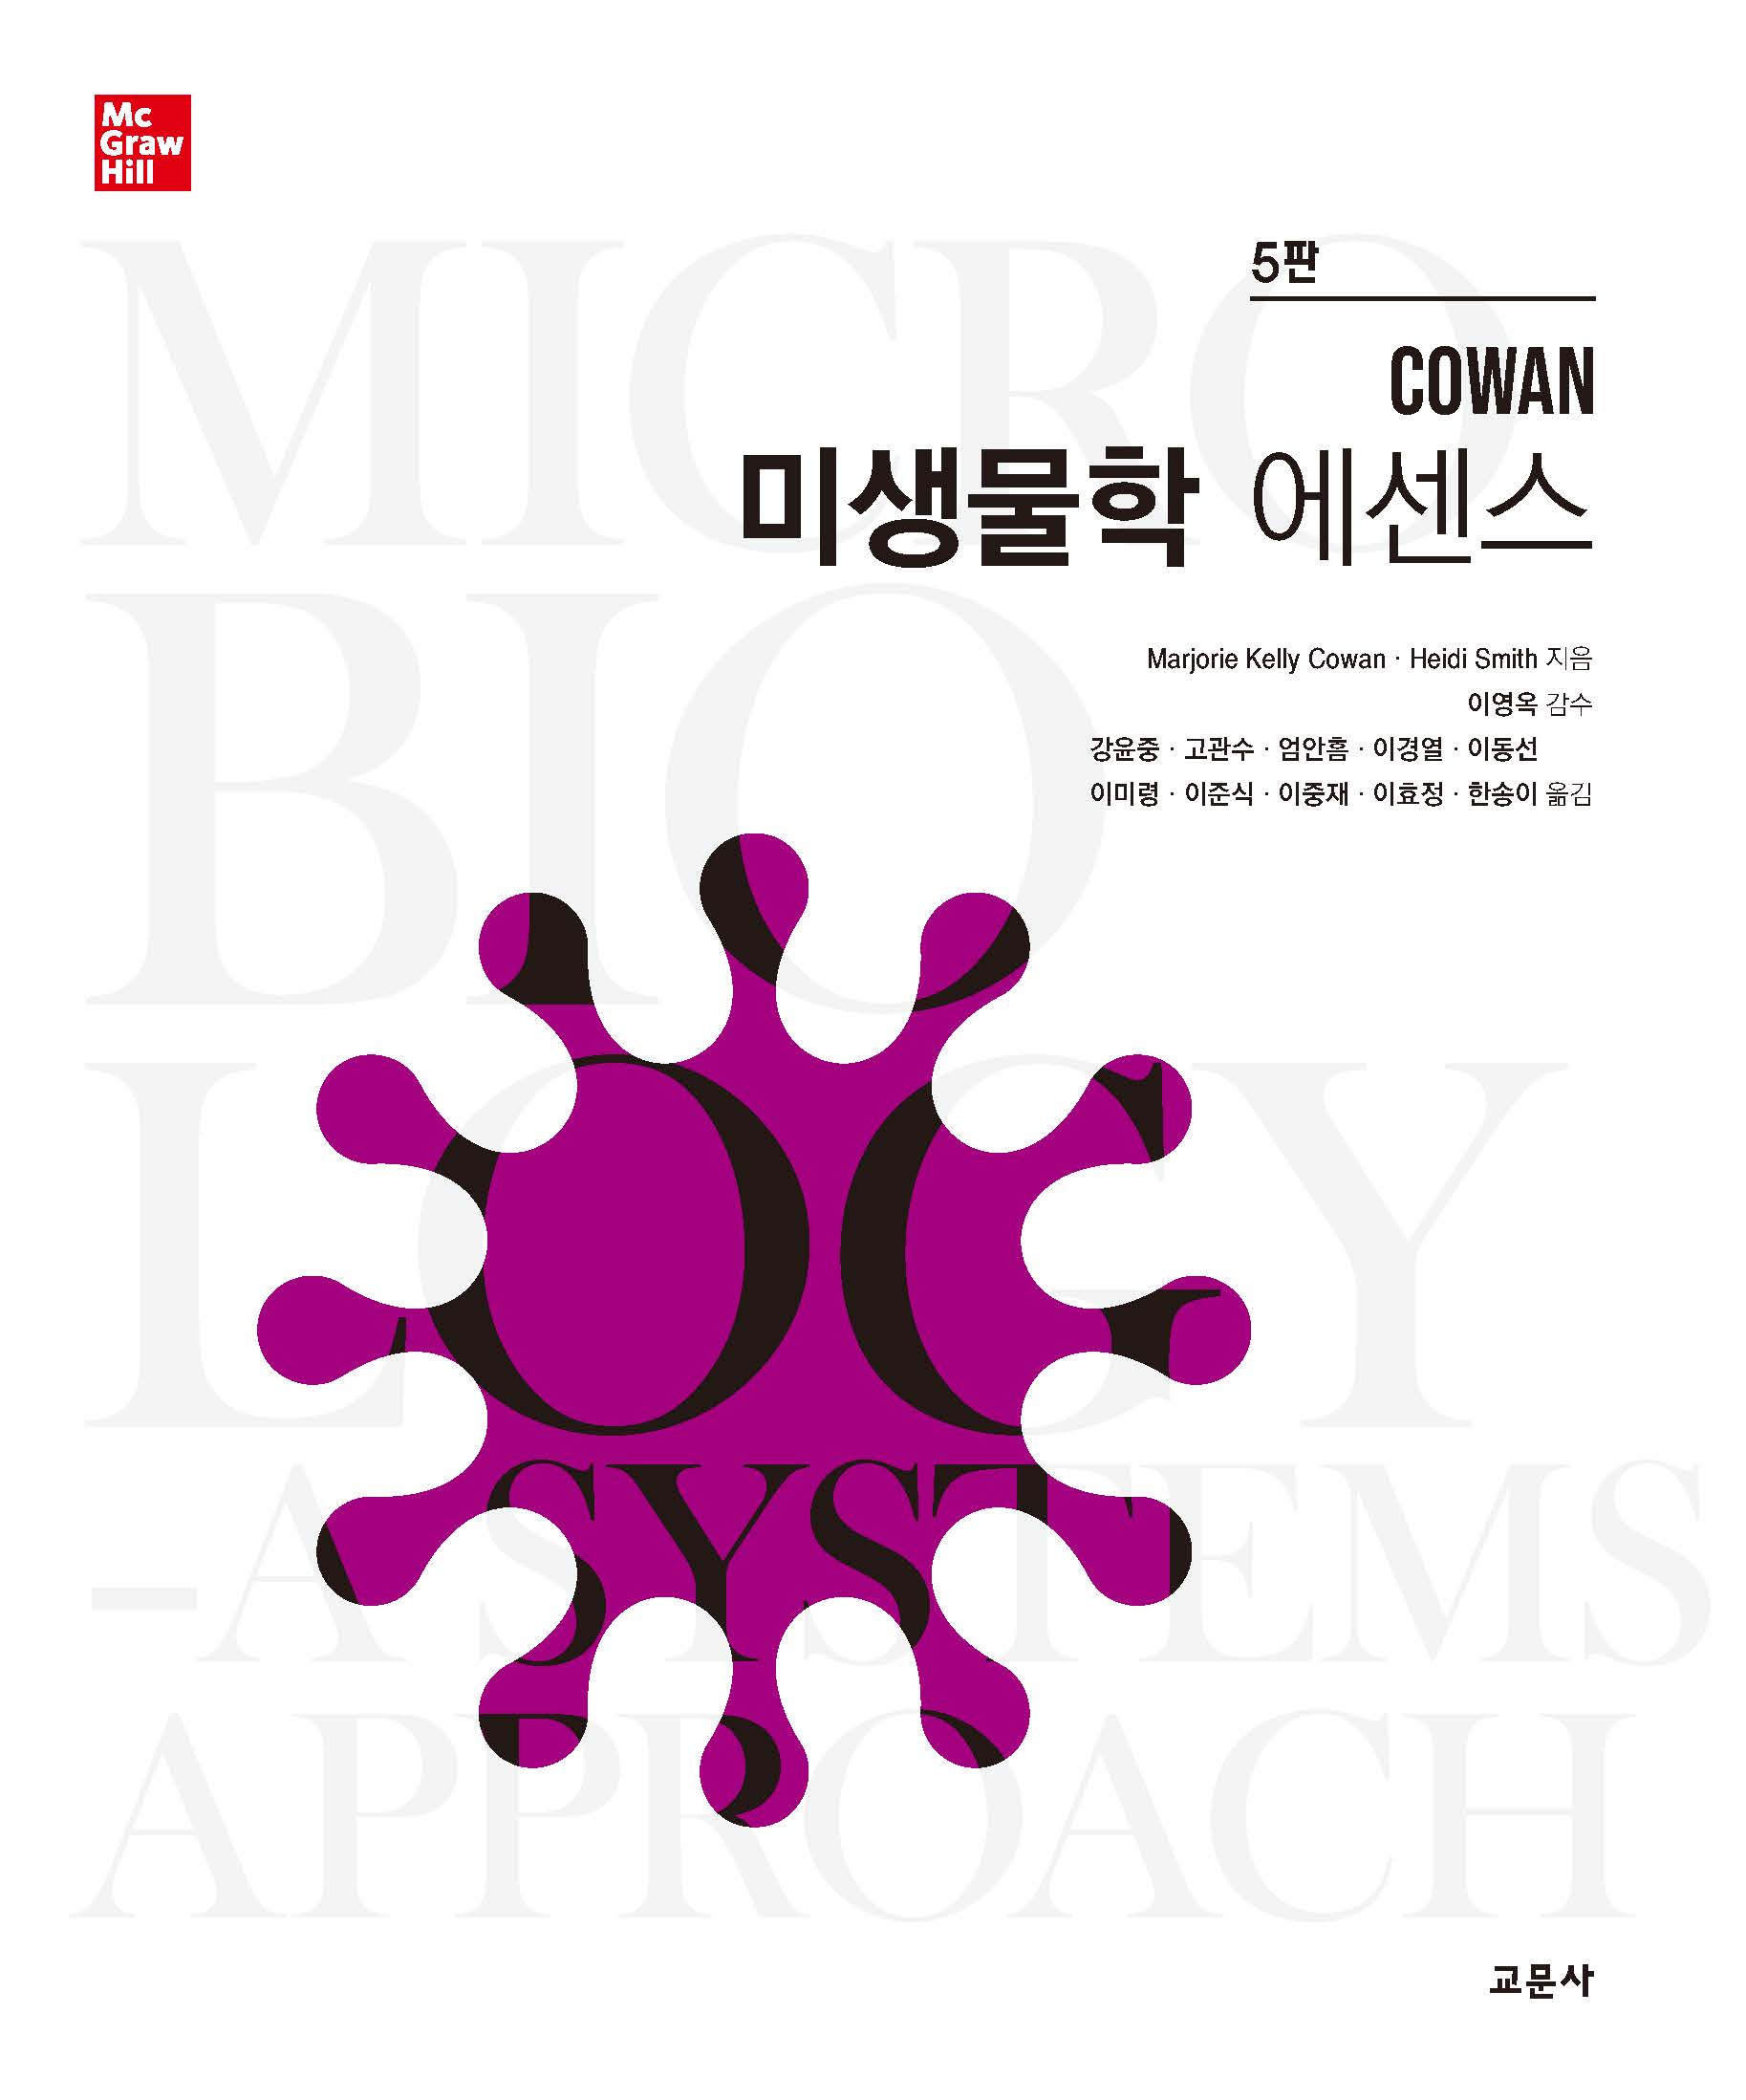 COWAN 미생물학 에센스 [5판]